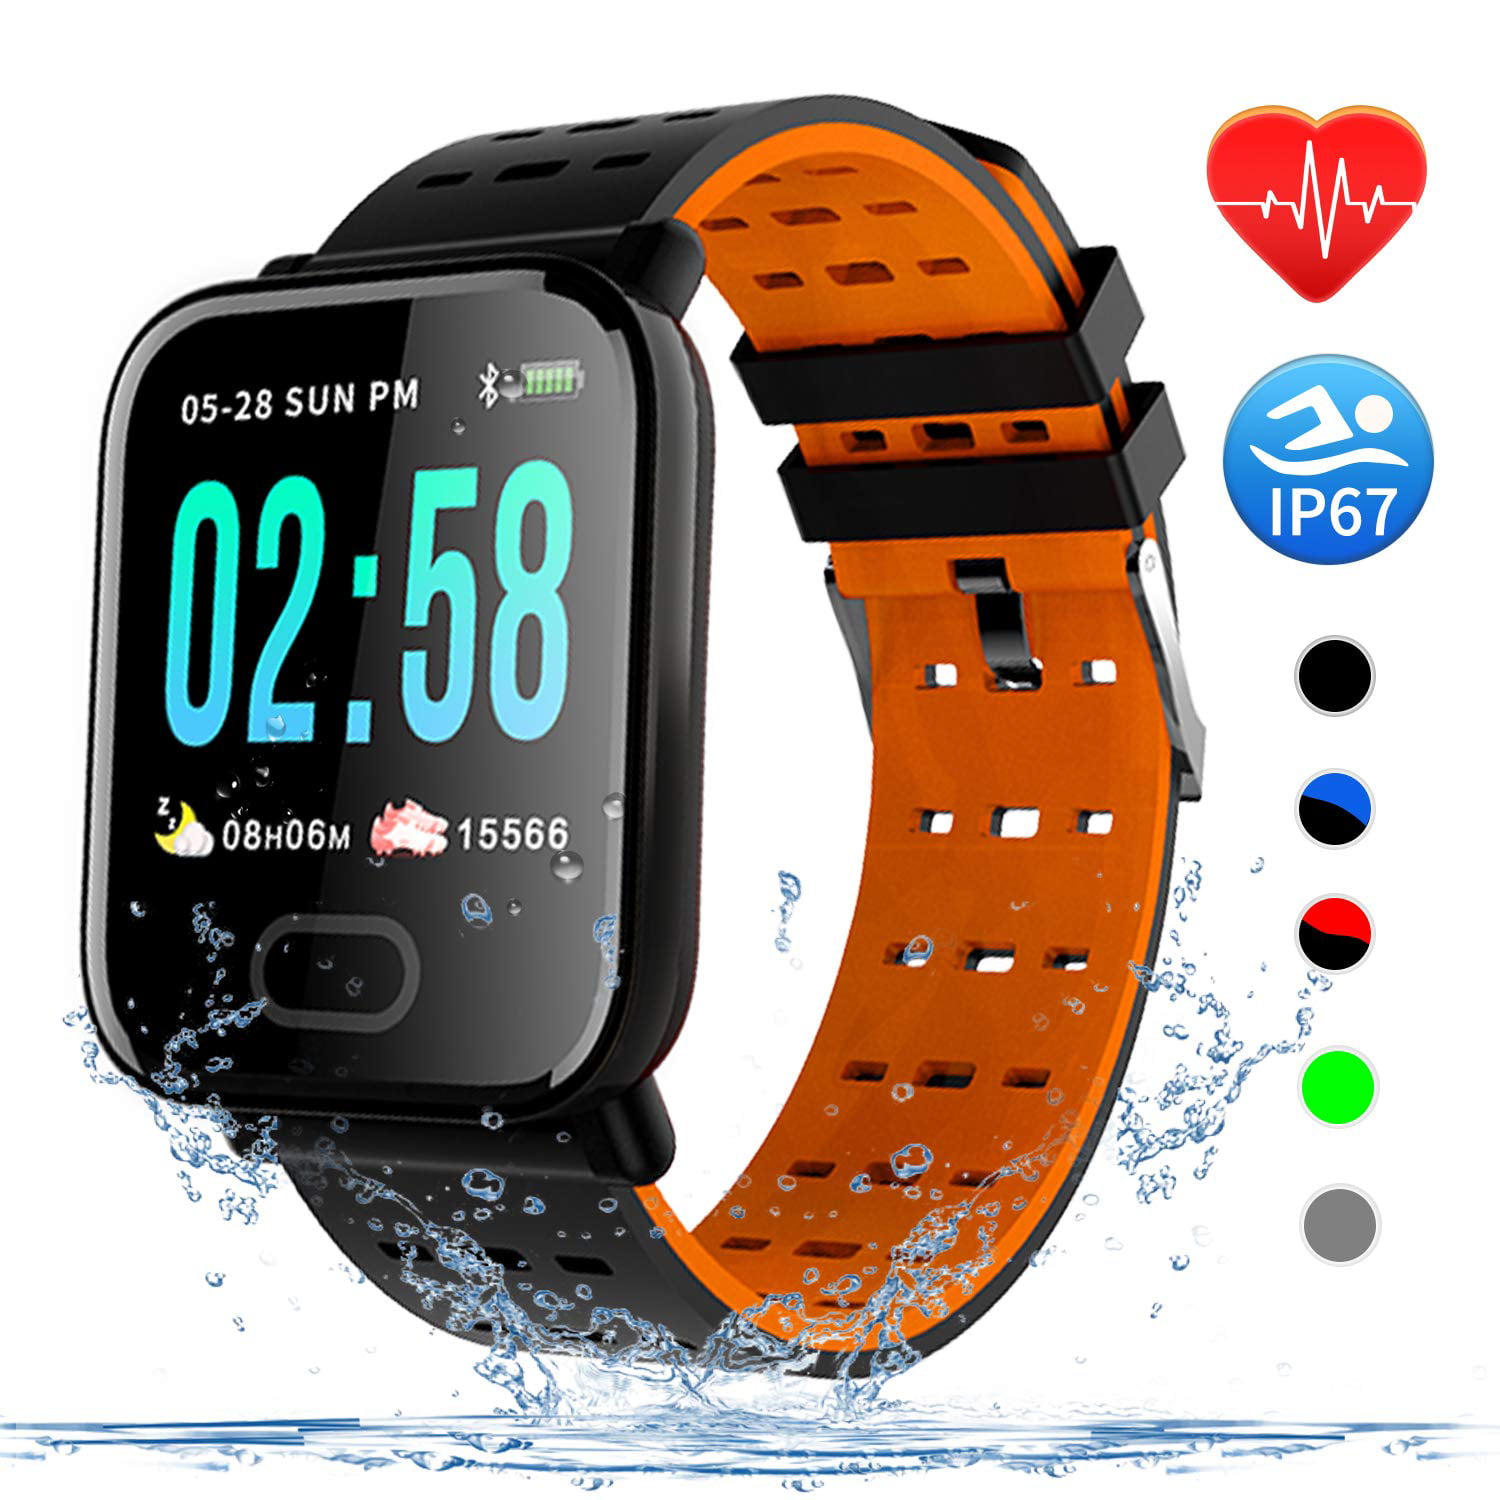 smart wristband bracelet watch heart rate monitor blood pressure fitness tracker